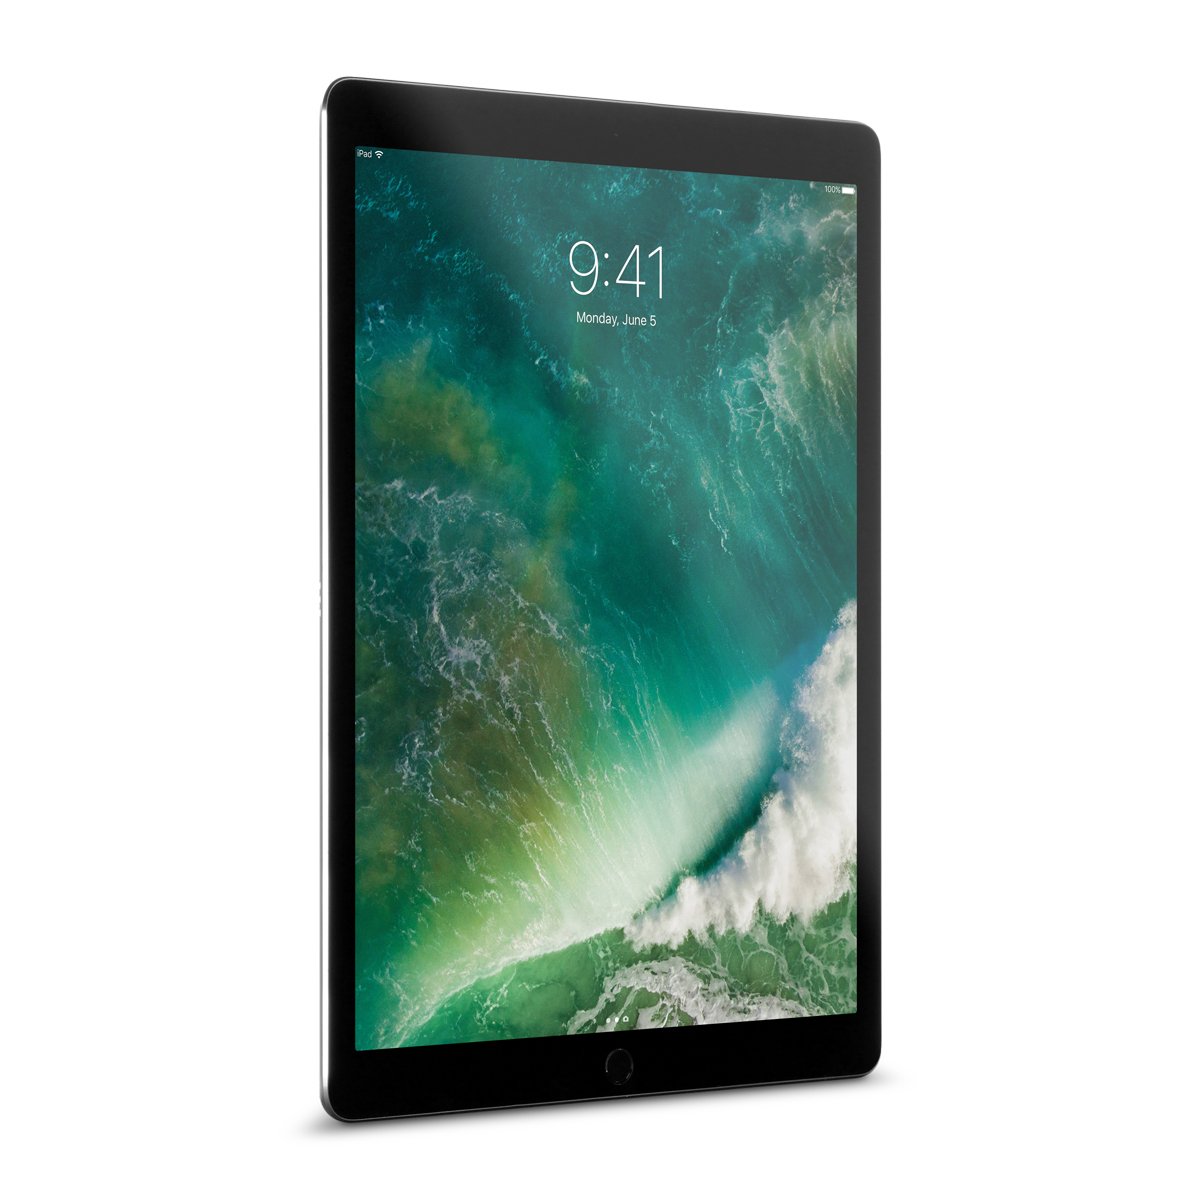 iPad 10.2-inch (2021) 9th Gen — #WoodBack Skin